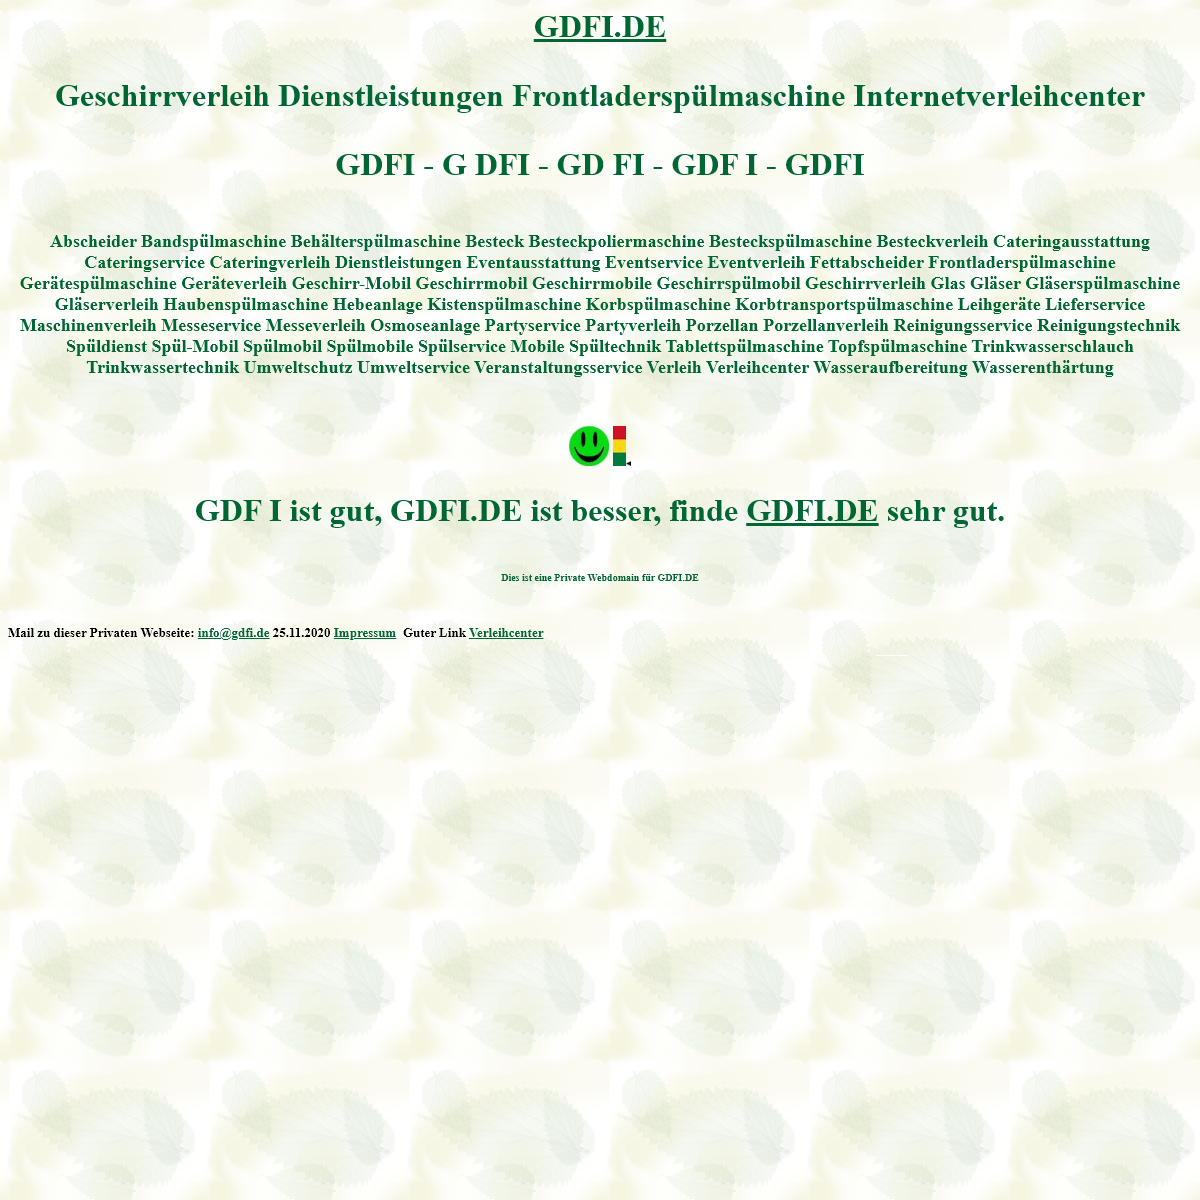 A complete backup of gdfi.de